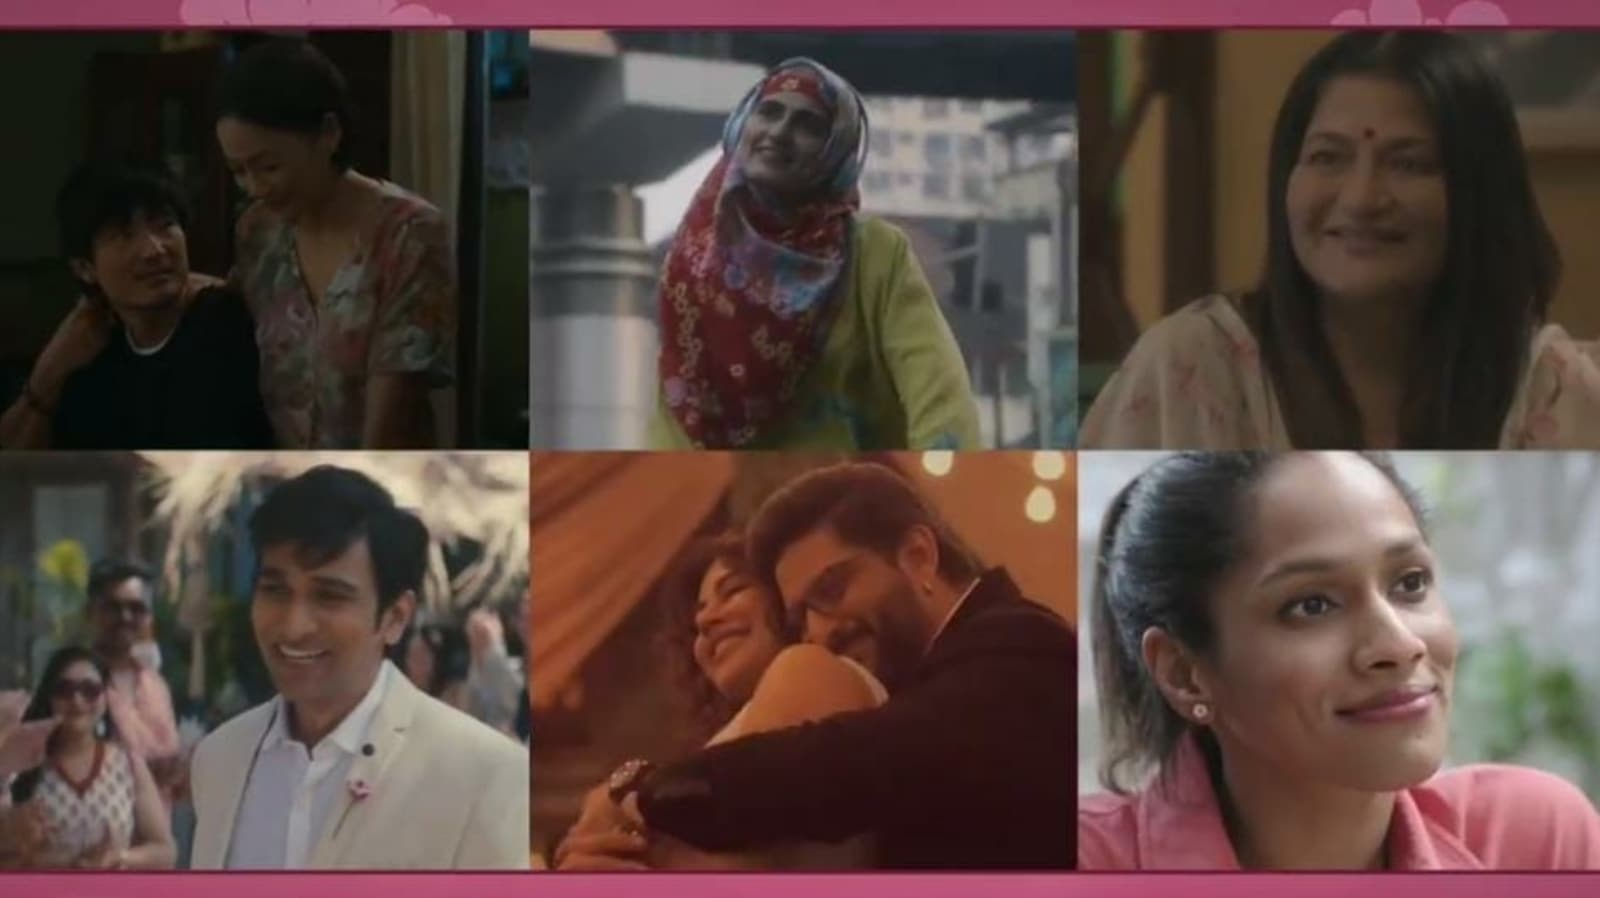 Modern Love Mumbai trailer: Amazon Prime Video brings warm stories of love  | Web Series - Hindustan Times